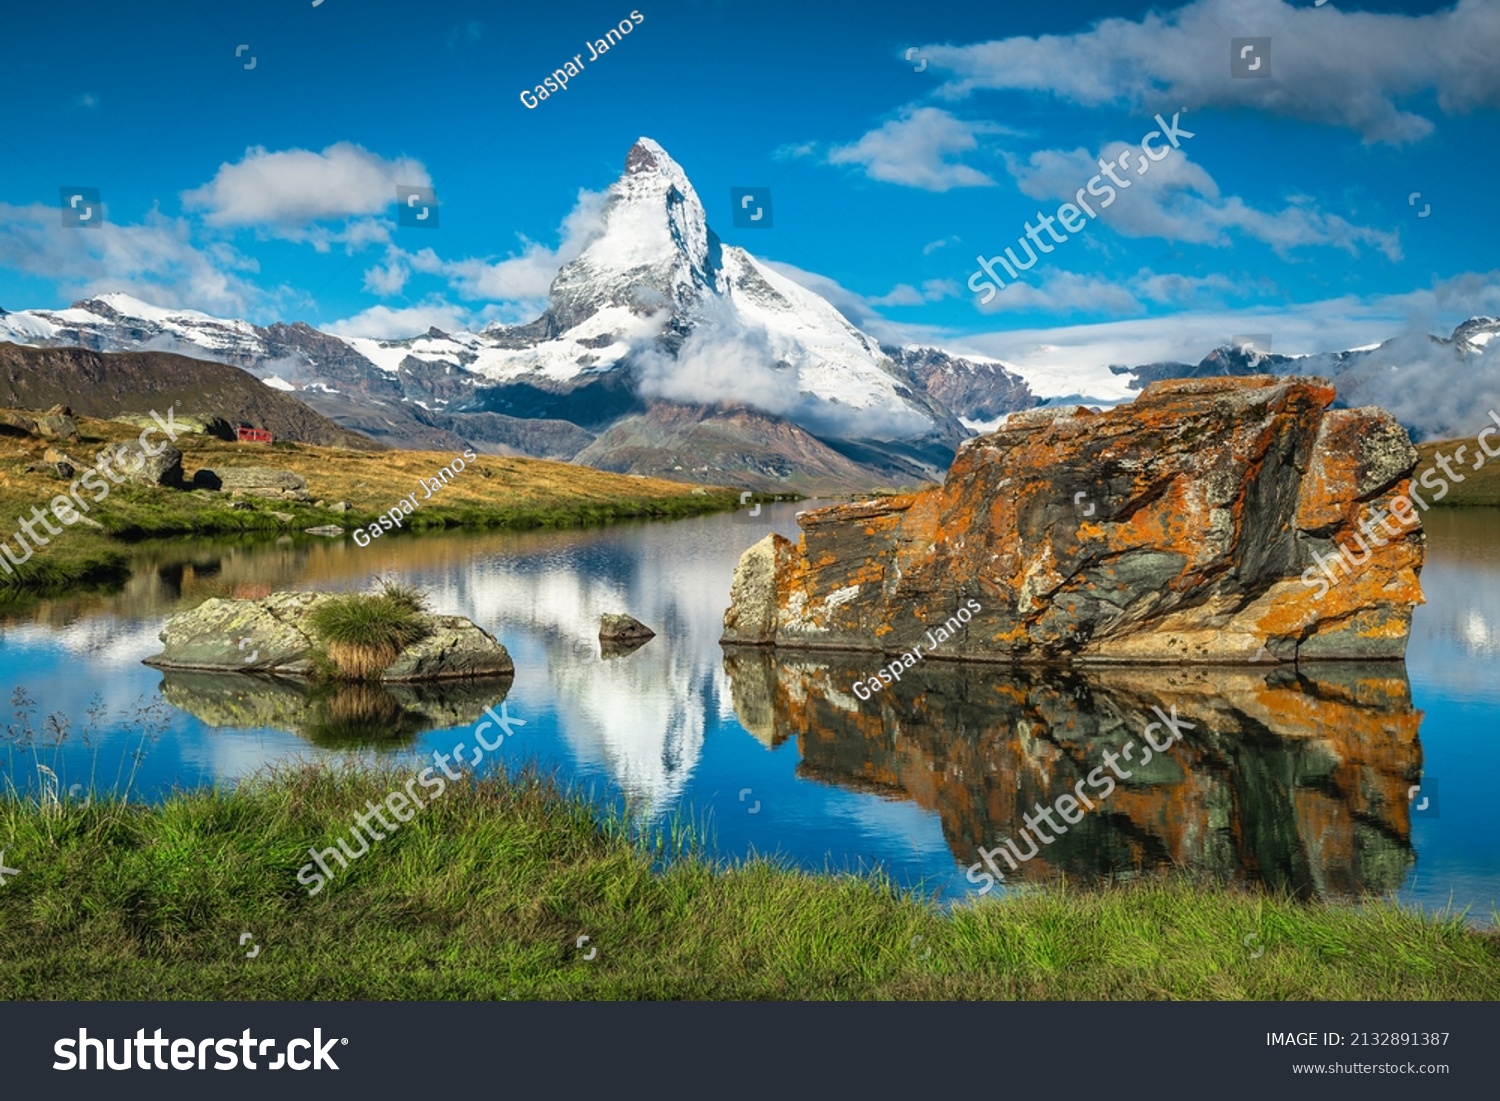 One of the most beautiful mountain of the world, Matterhorn view from the wonderful alpine Stellisee lake, Zermatt, Canton of Valais, Switzerland, Europe #2132891387